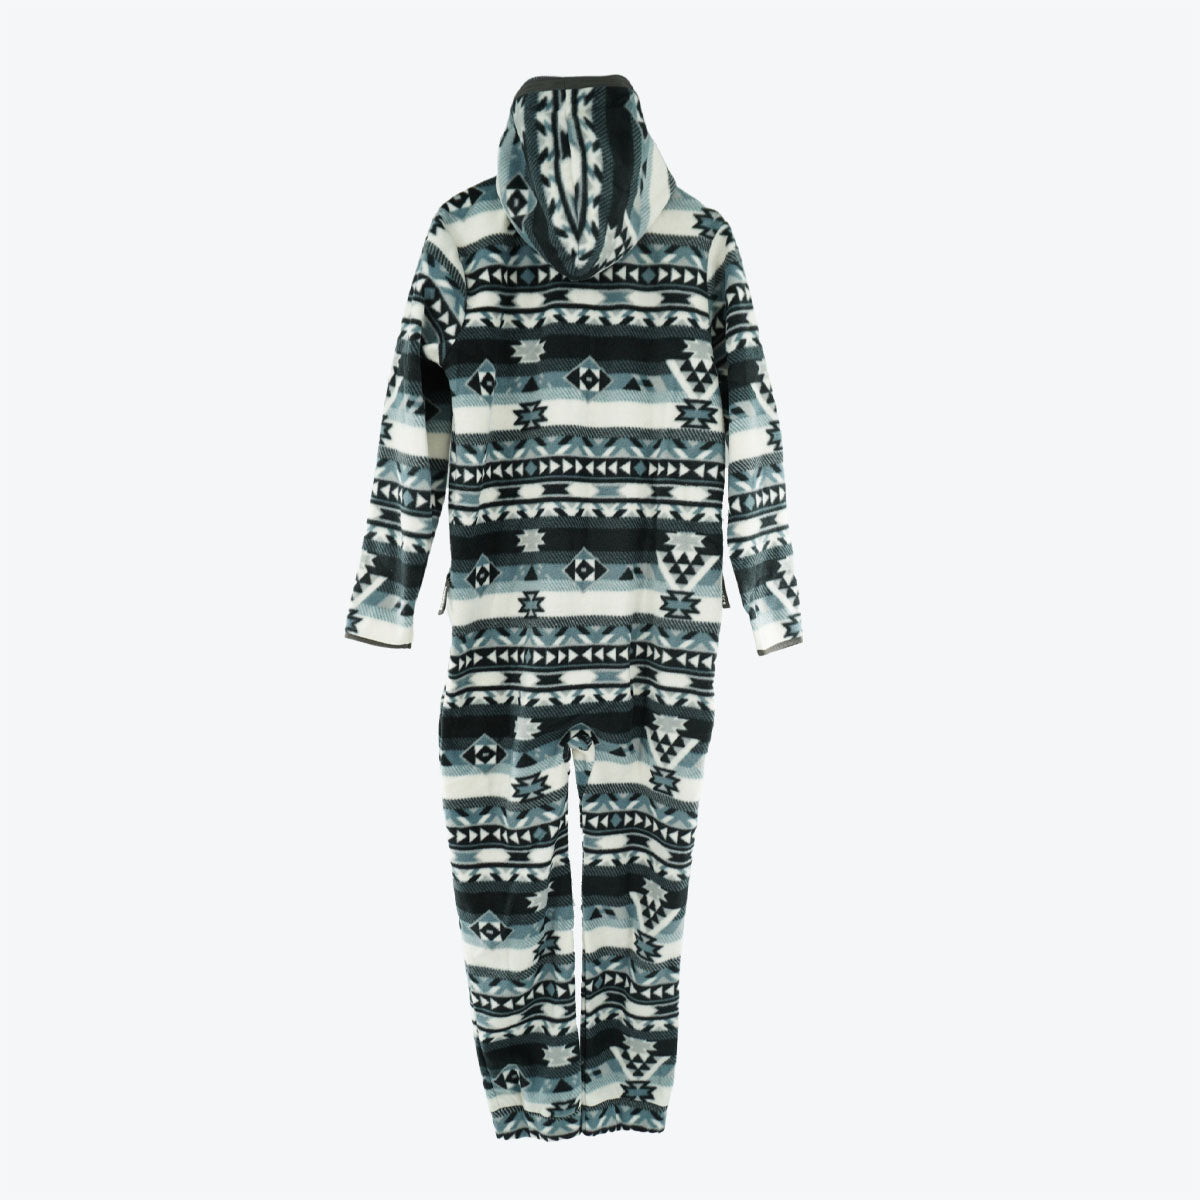 Onepiece Aztec Fleece Jumpsuit in Black/White Medium